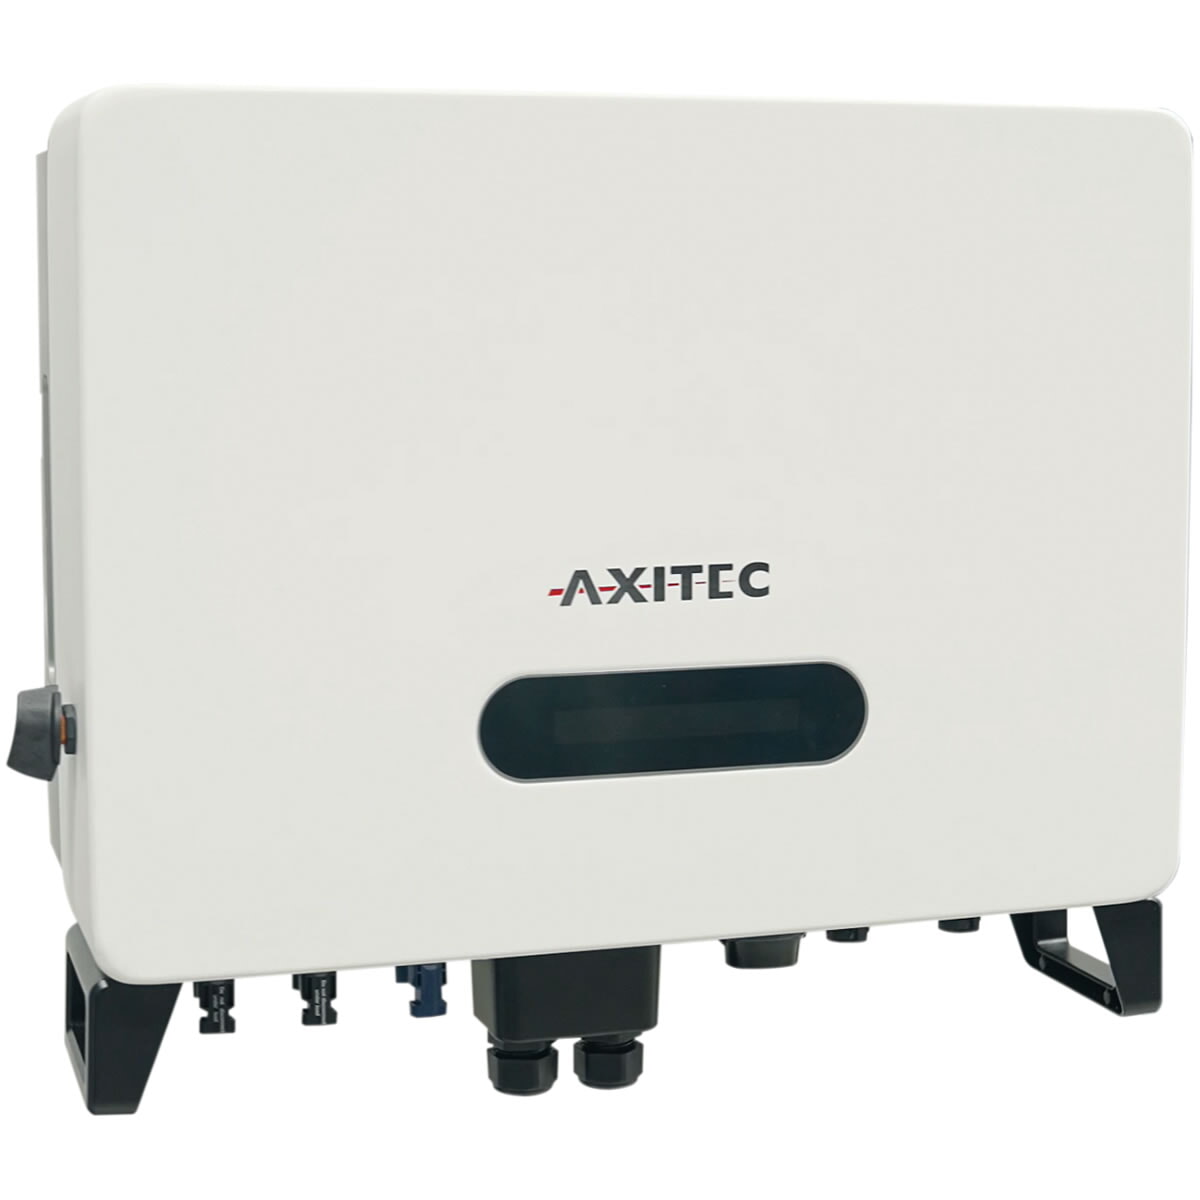 AXITEC Axihycon 10H hybrid inverter, 3-phase